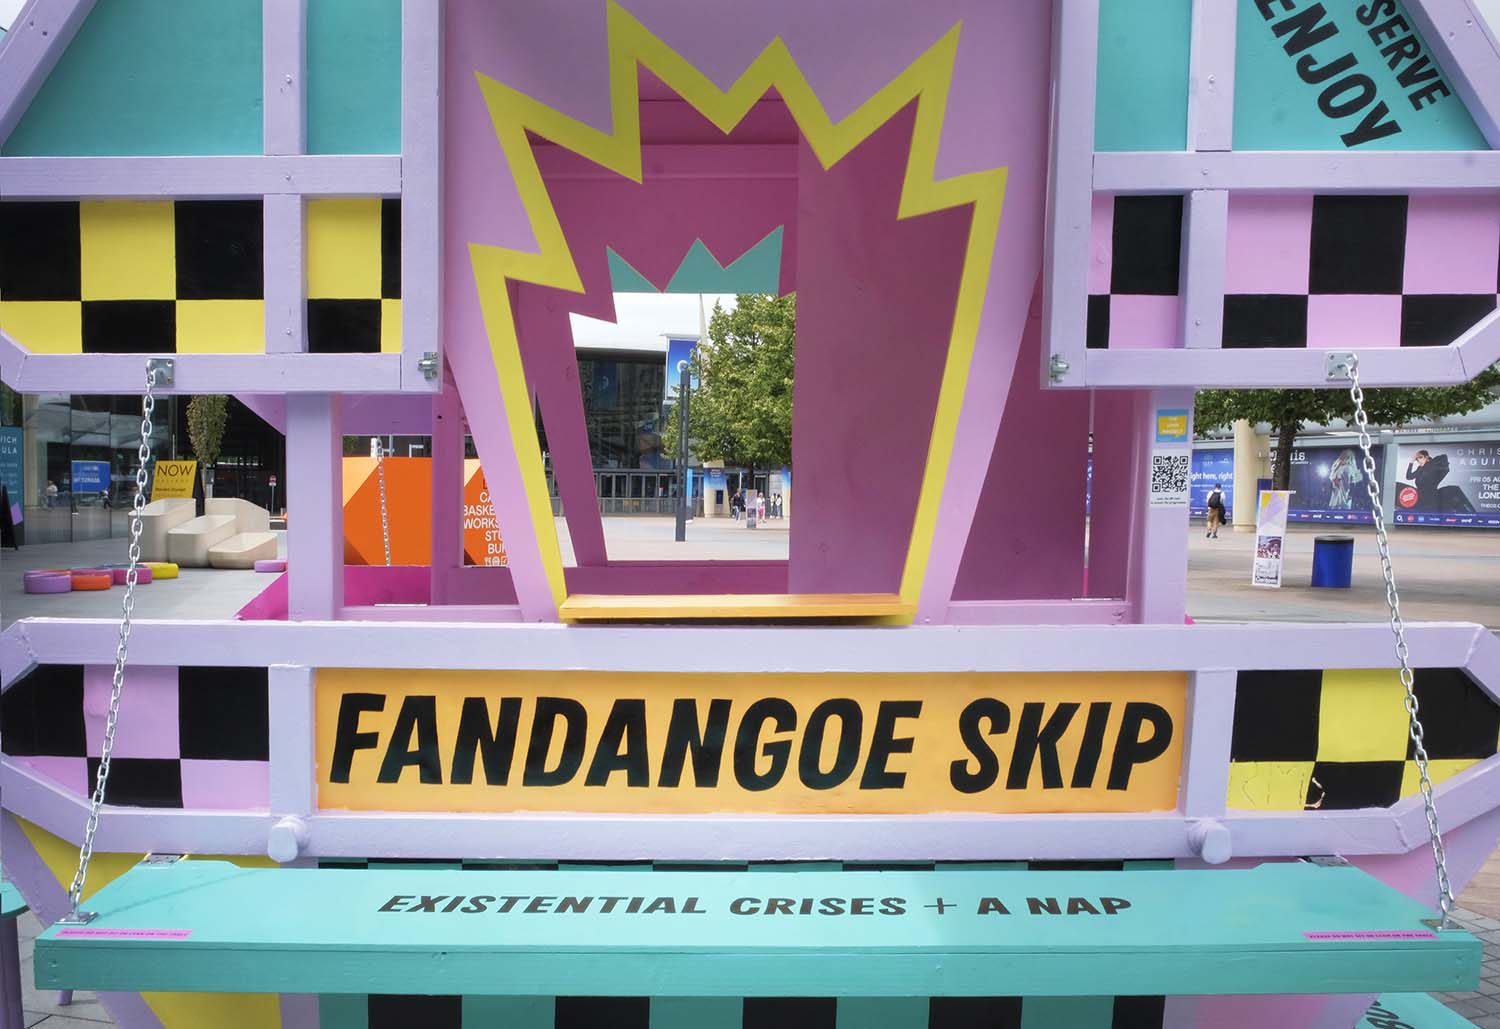 Fandangoe Kid, Fandangoe SKIP, in collaboration with SKIP Gallery, The Loss Project and Caukin Studio